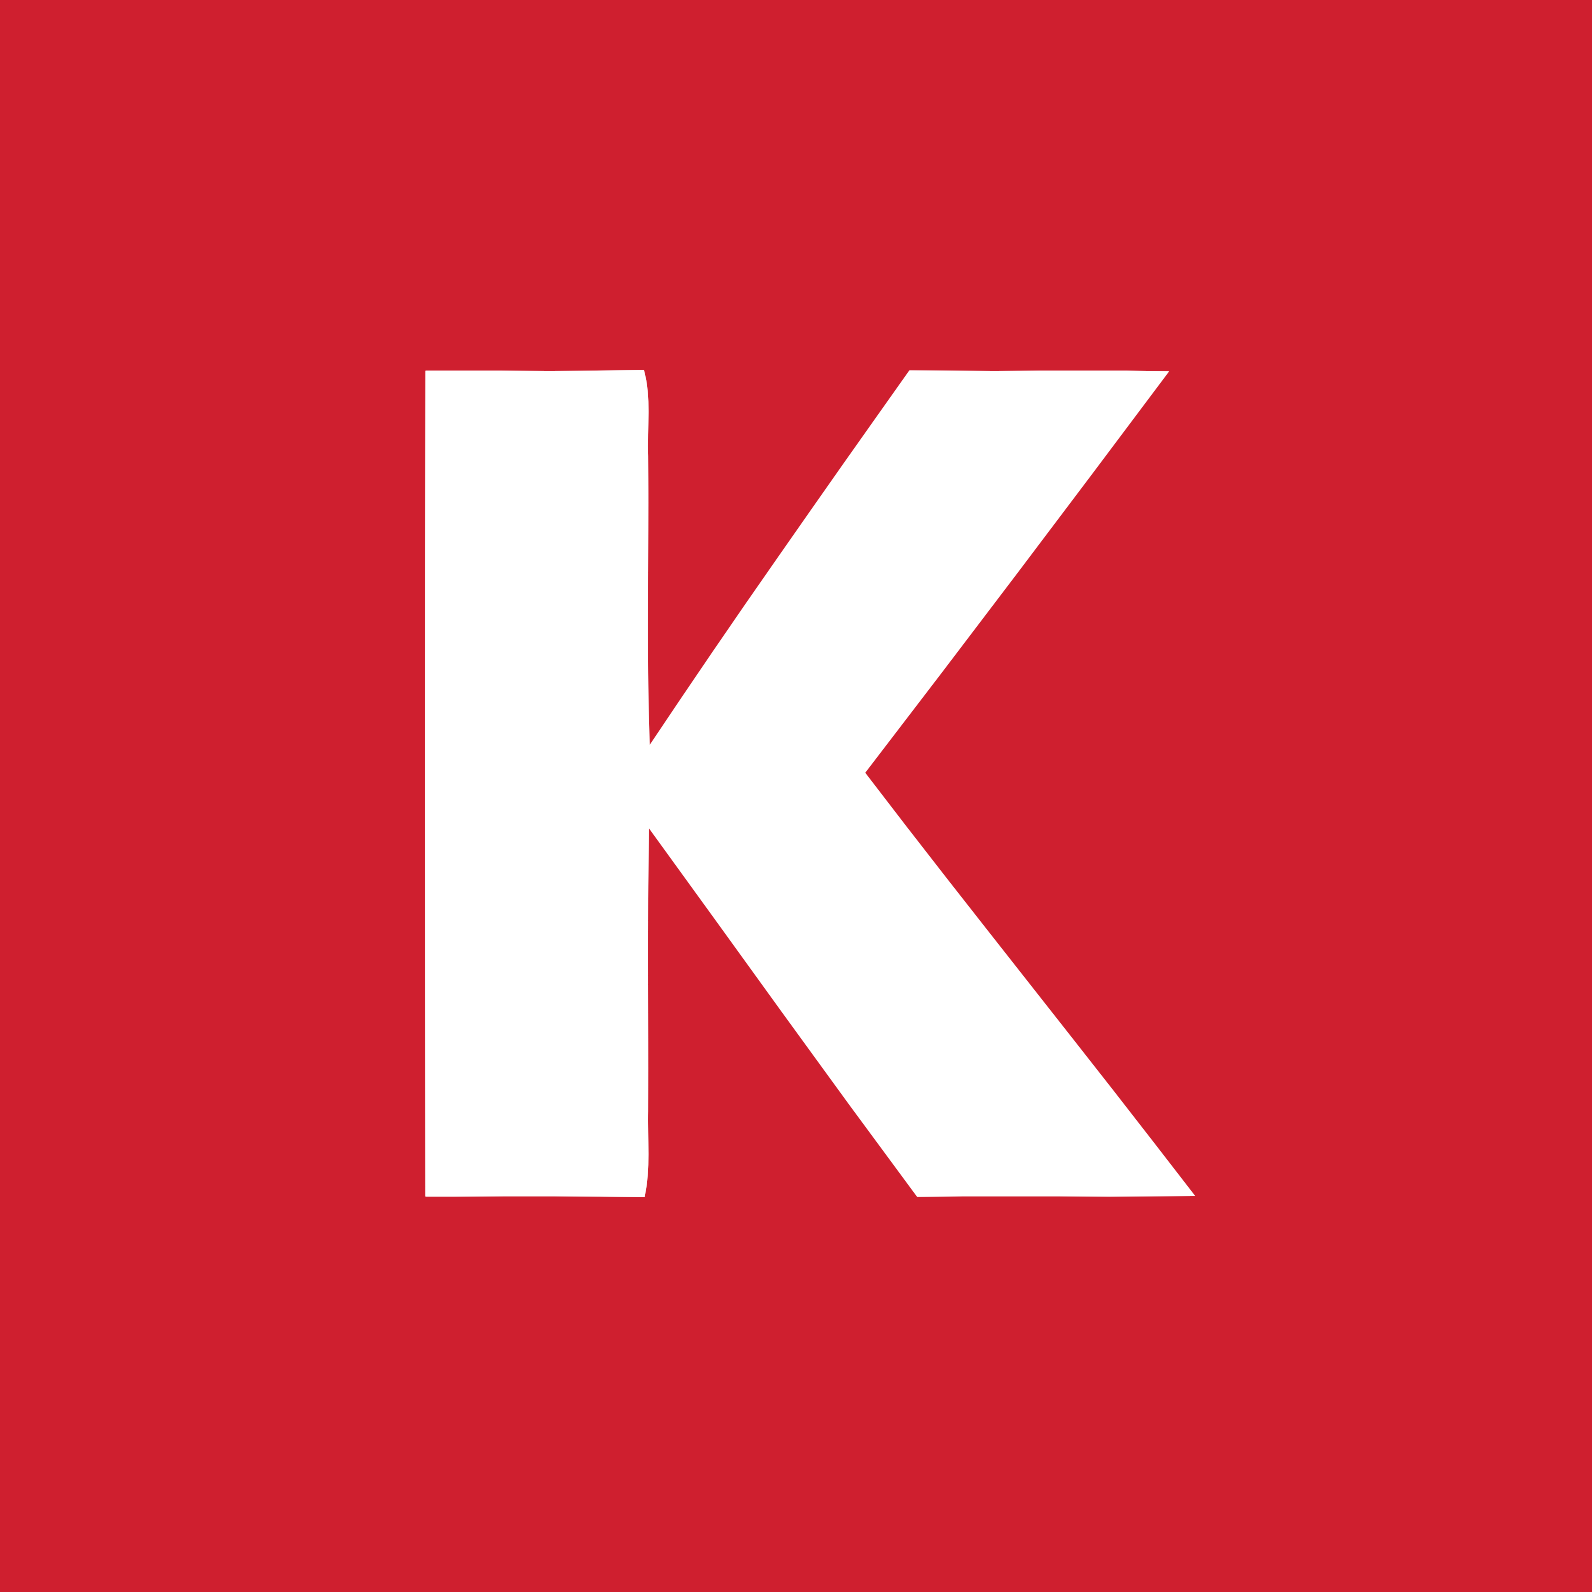 Kilroy Realty logo (transparent PNG)